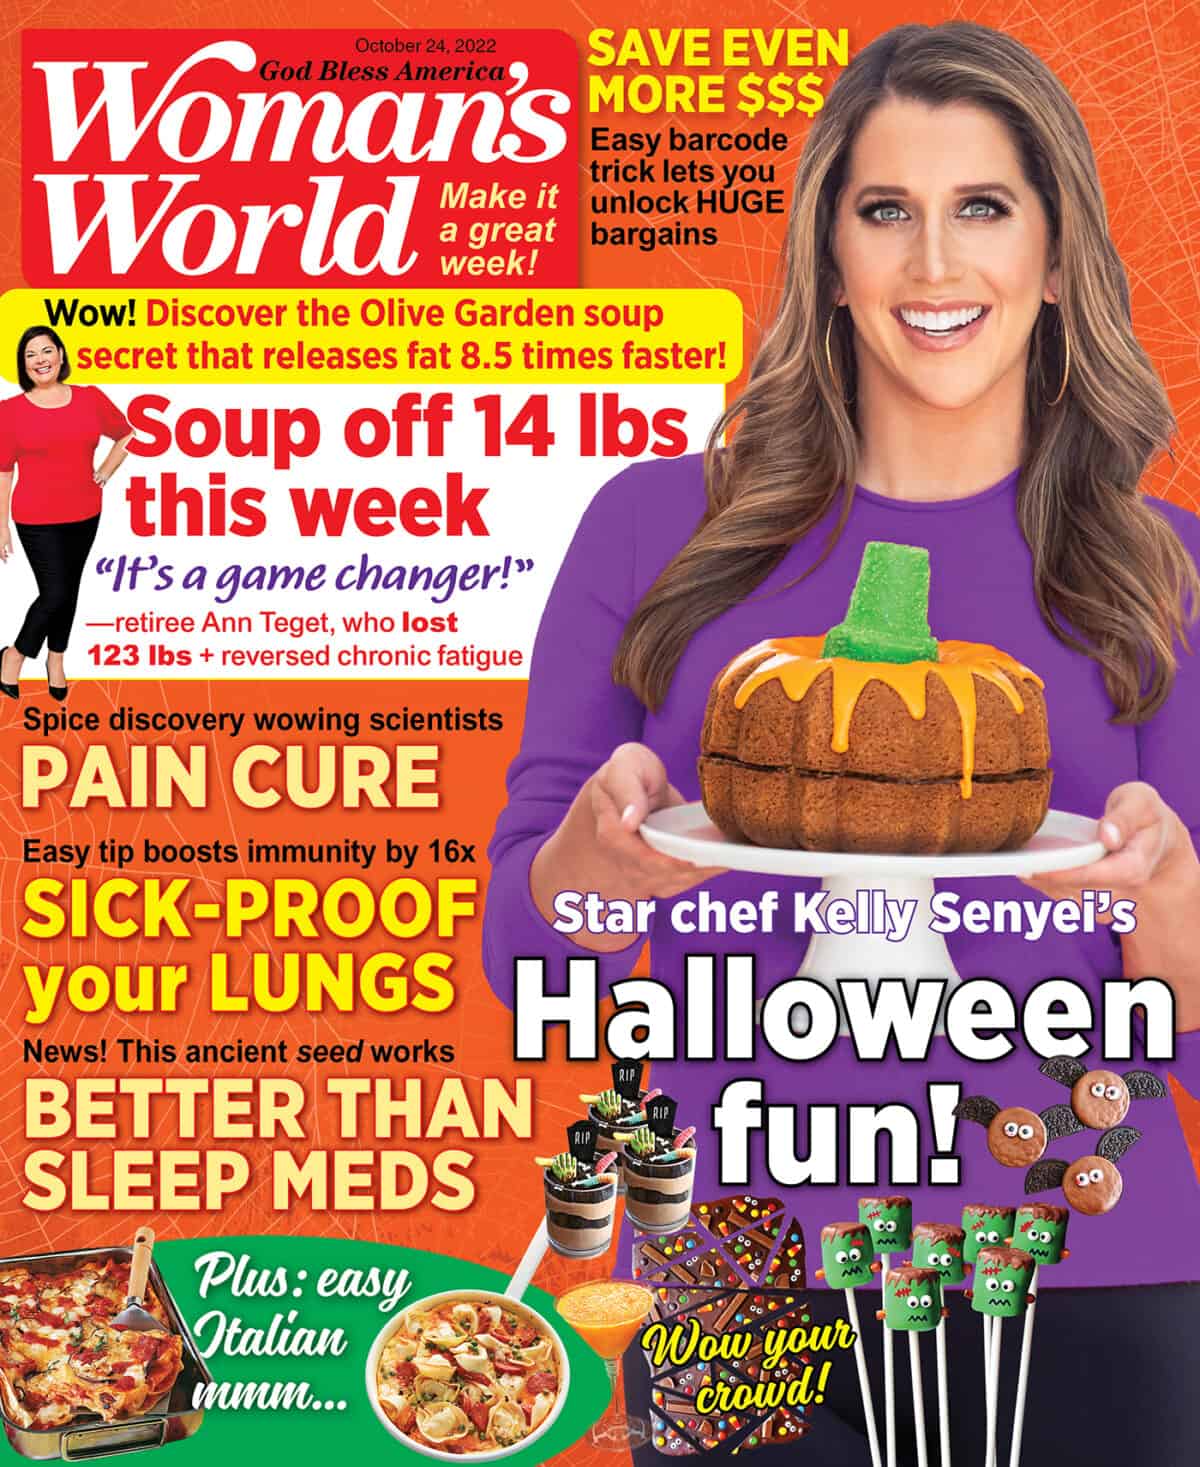 Kelly Senyei on the October cover of Woman's World magazine